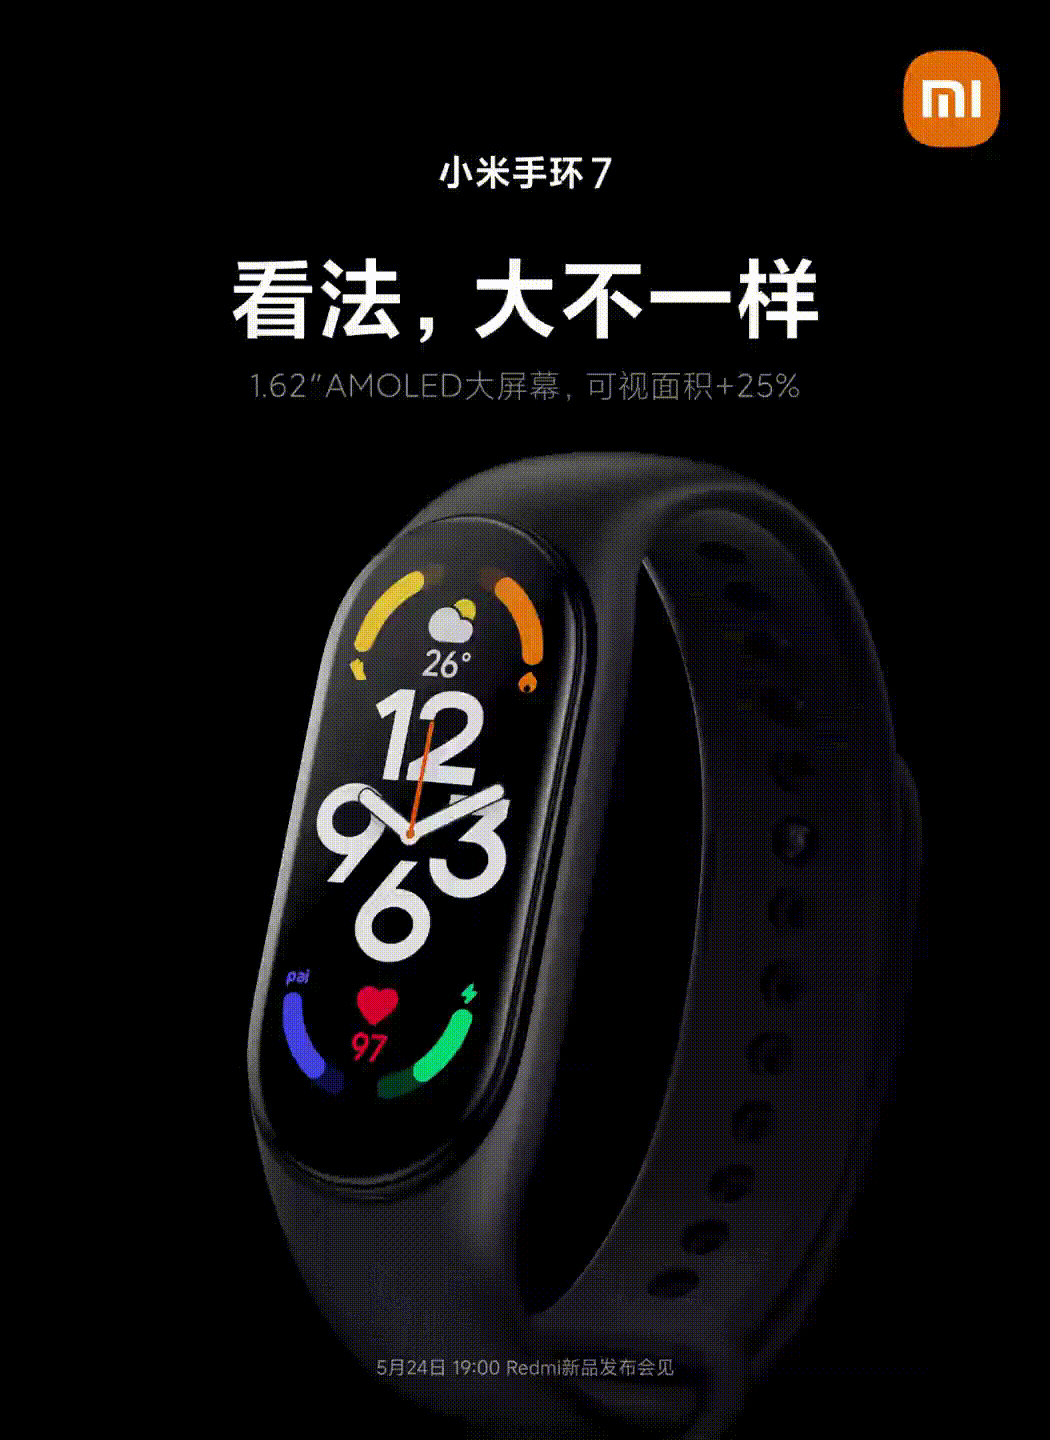 Обзор фитнес браслета xiaomi mi band 4 версии global — характеристики и отзыв про smart часы без nfc - вайфайка.ру